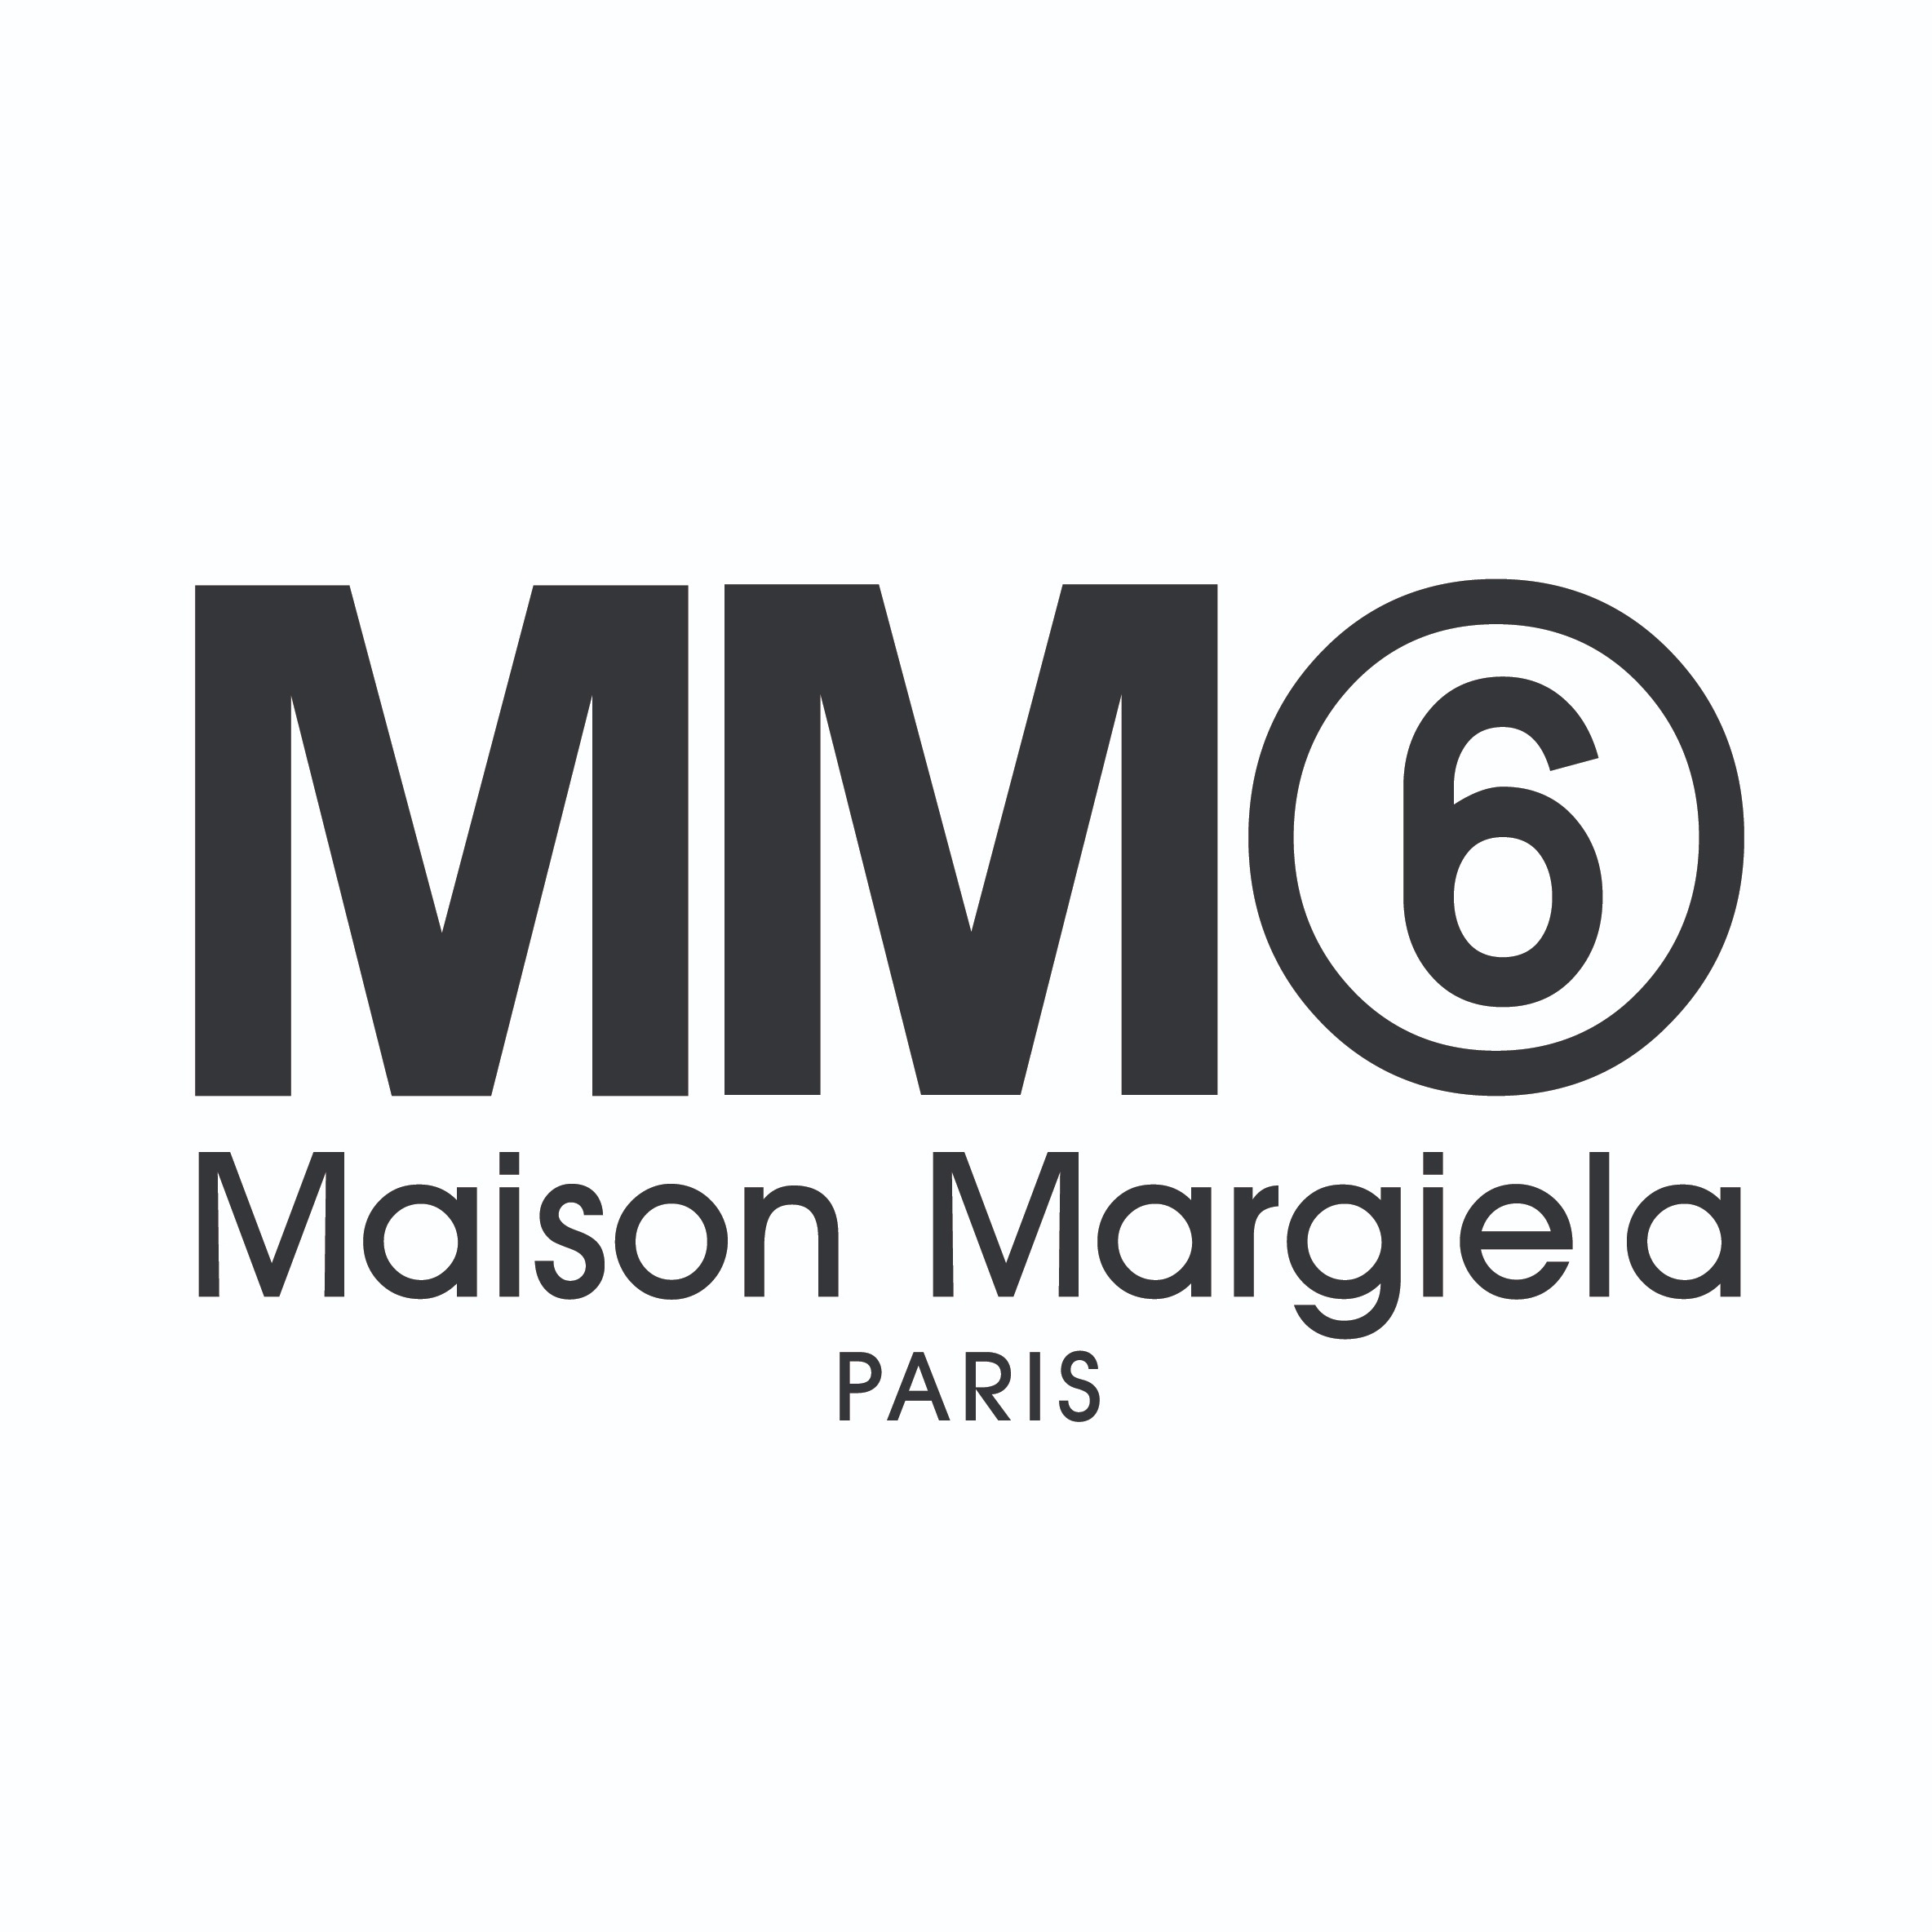 MM6 Maison Margiela Tokyo Shibuya Parco Logo